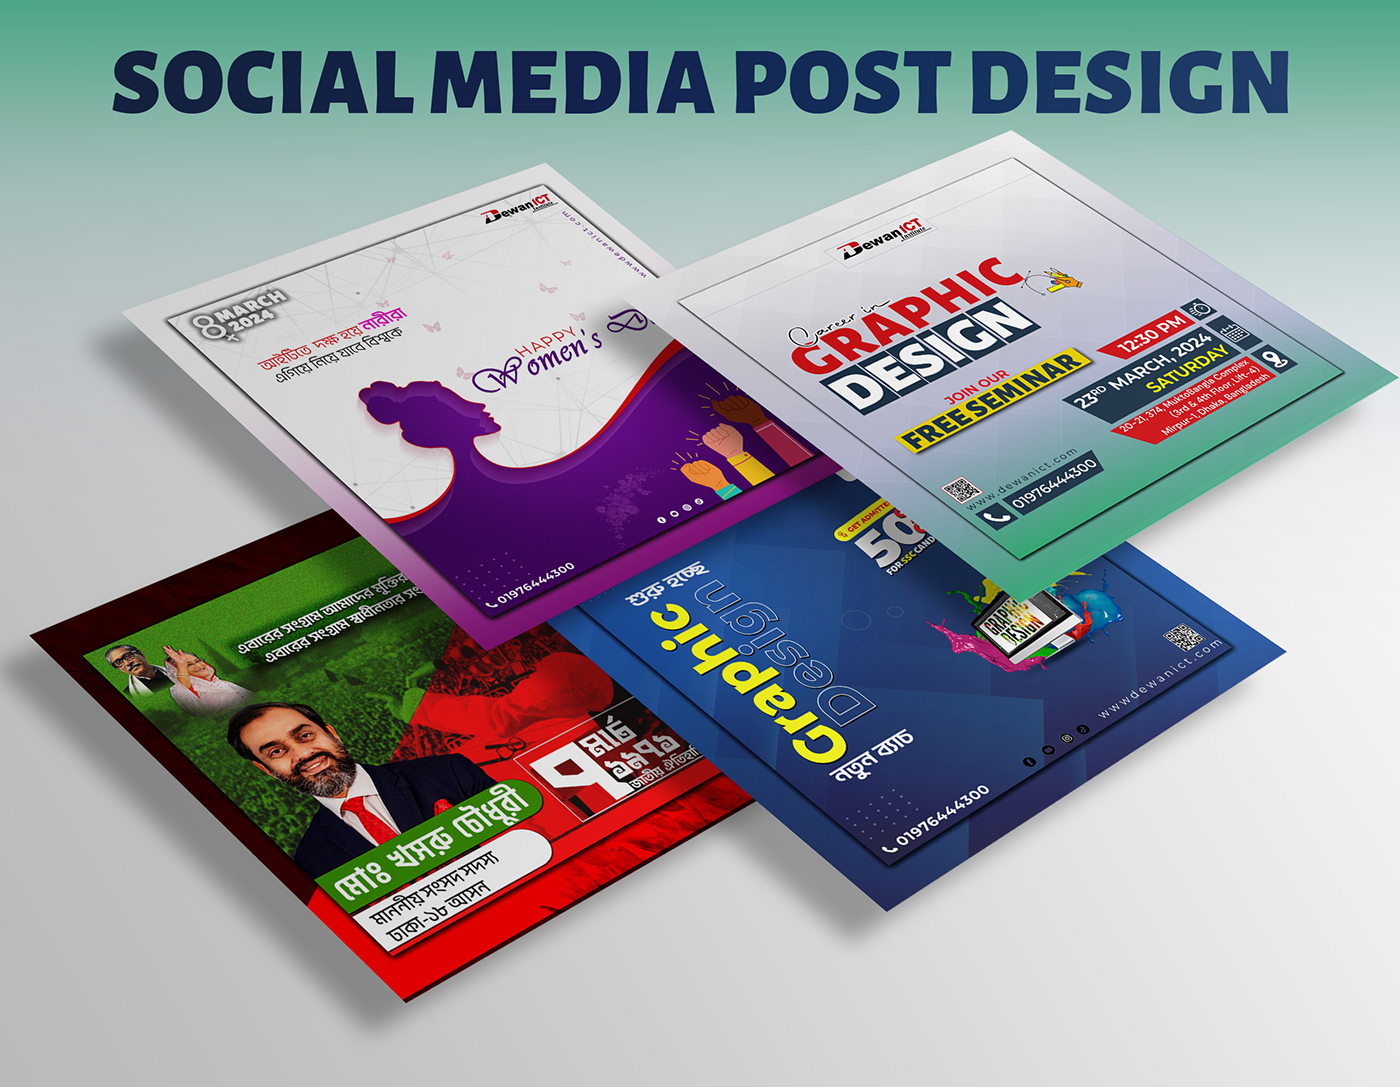 Design for Social Media post,
Graphic Design, Social Media Post Design, visual, 
as visual acumen